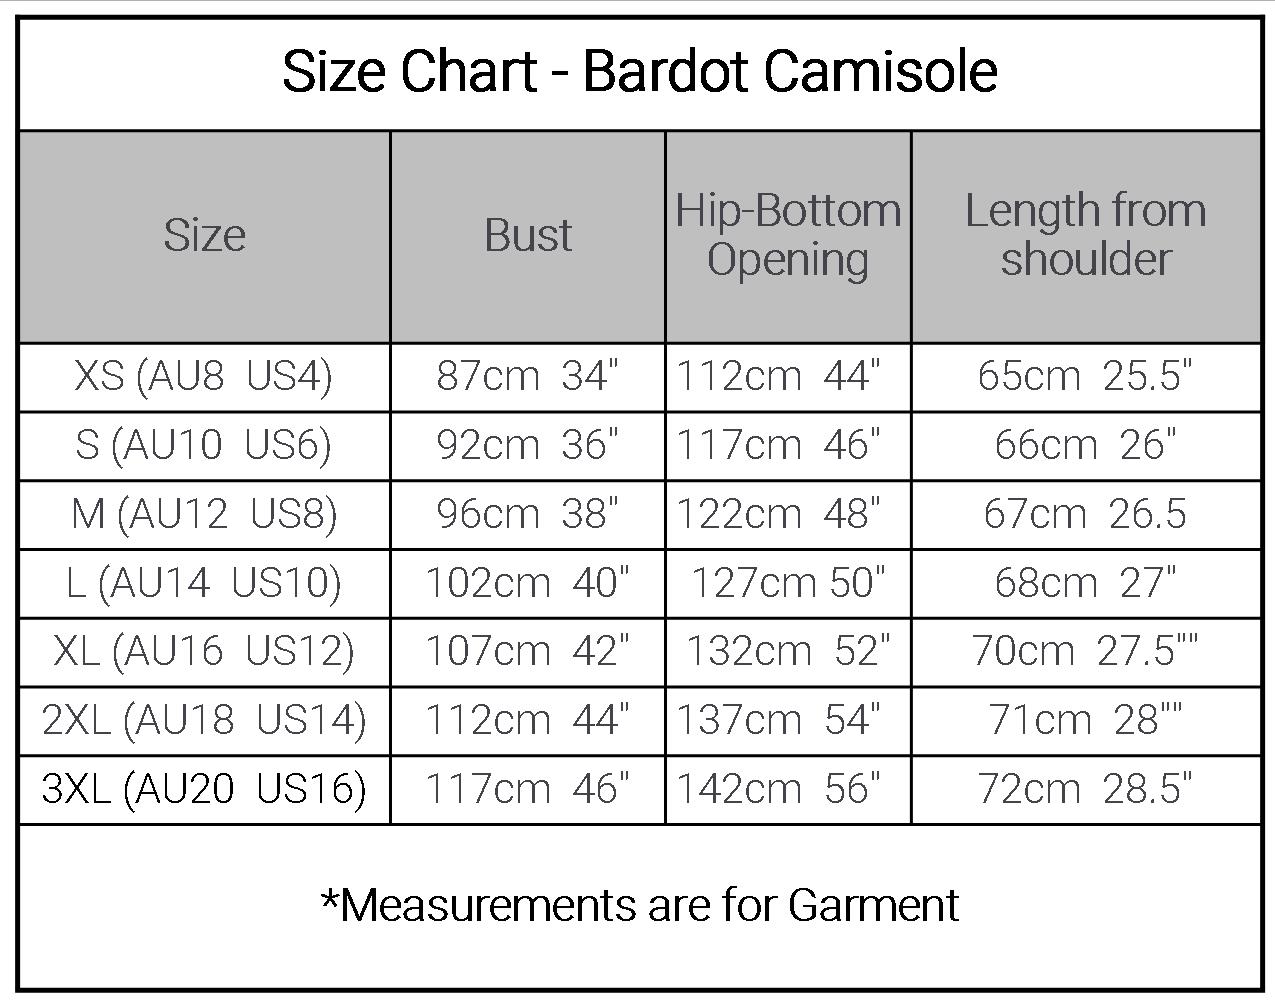 Bardot Cotton Ladies Camisole Size Chart